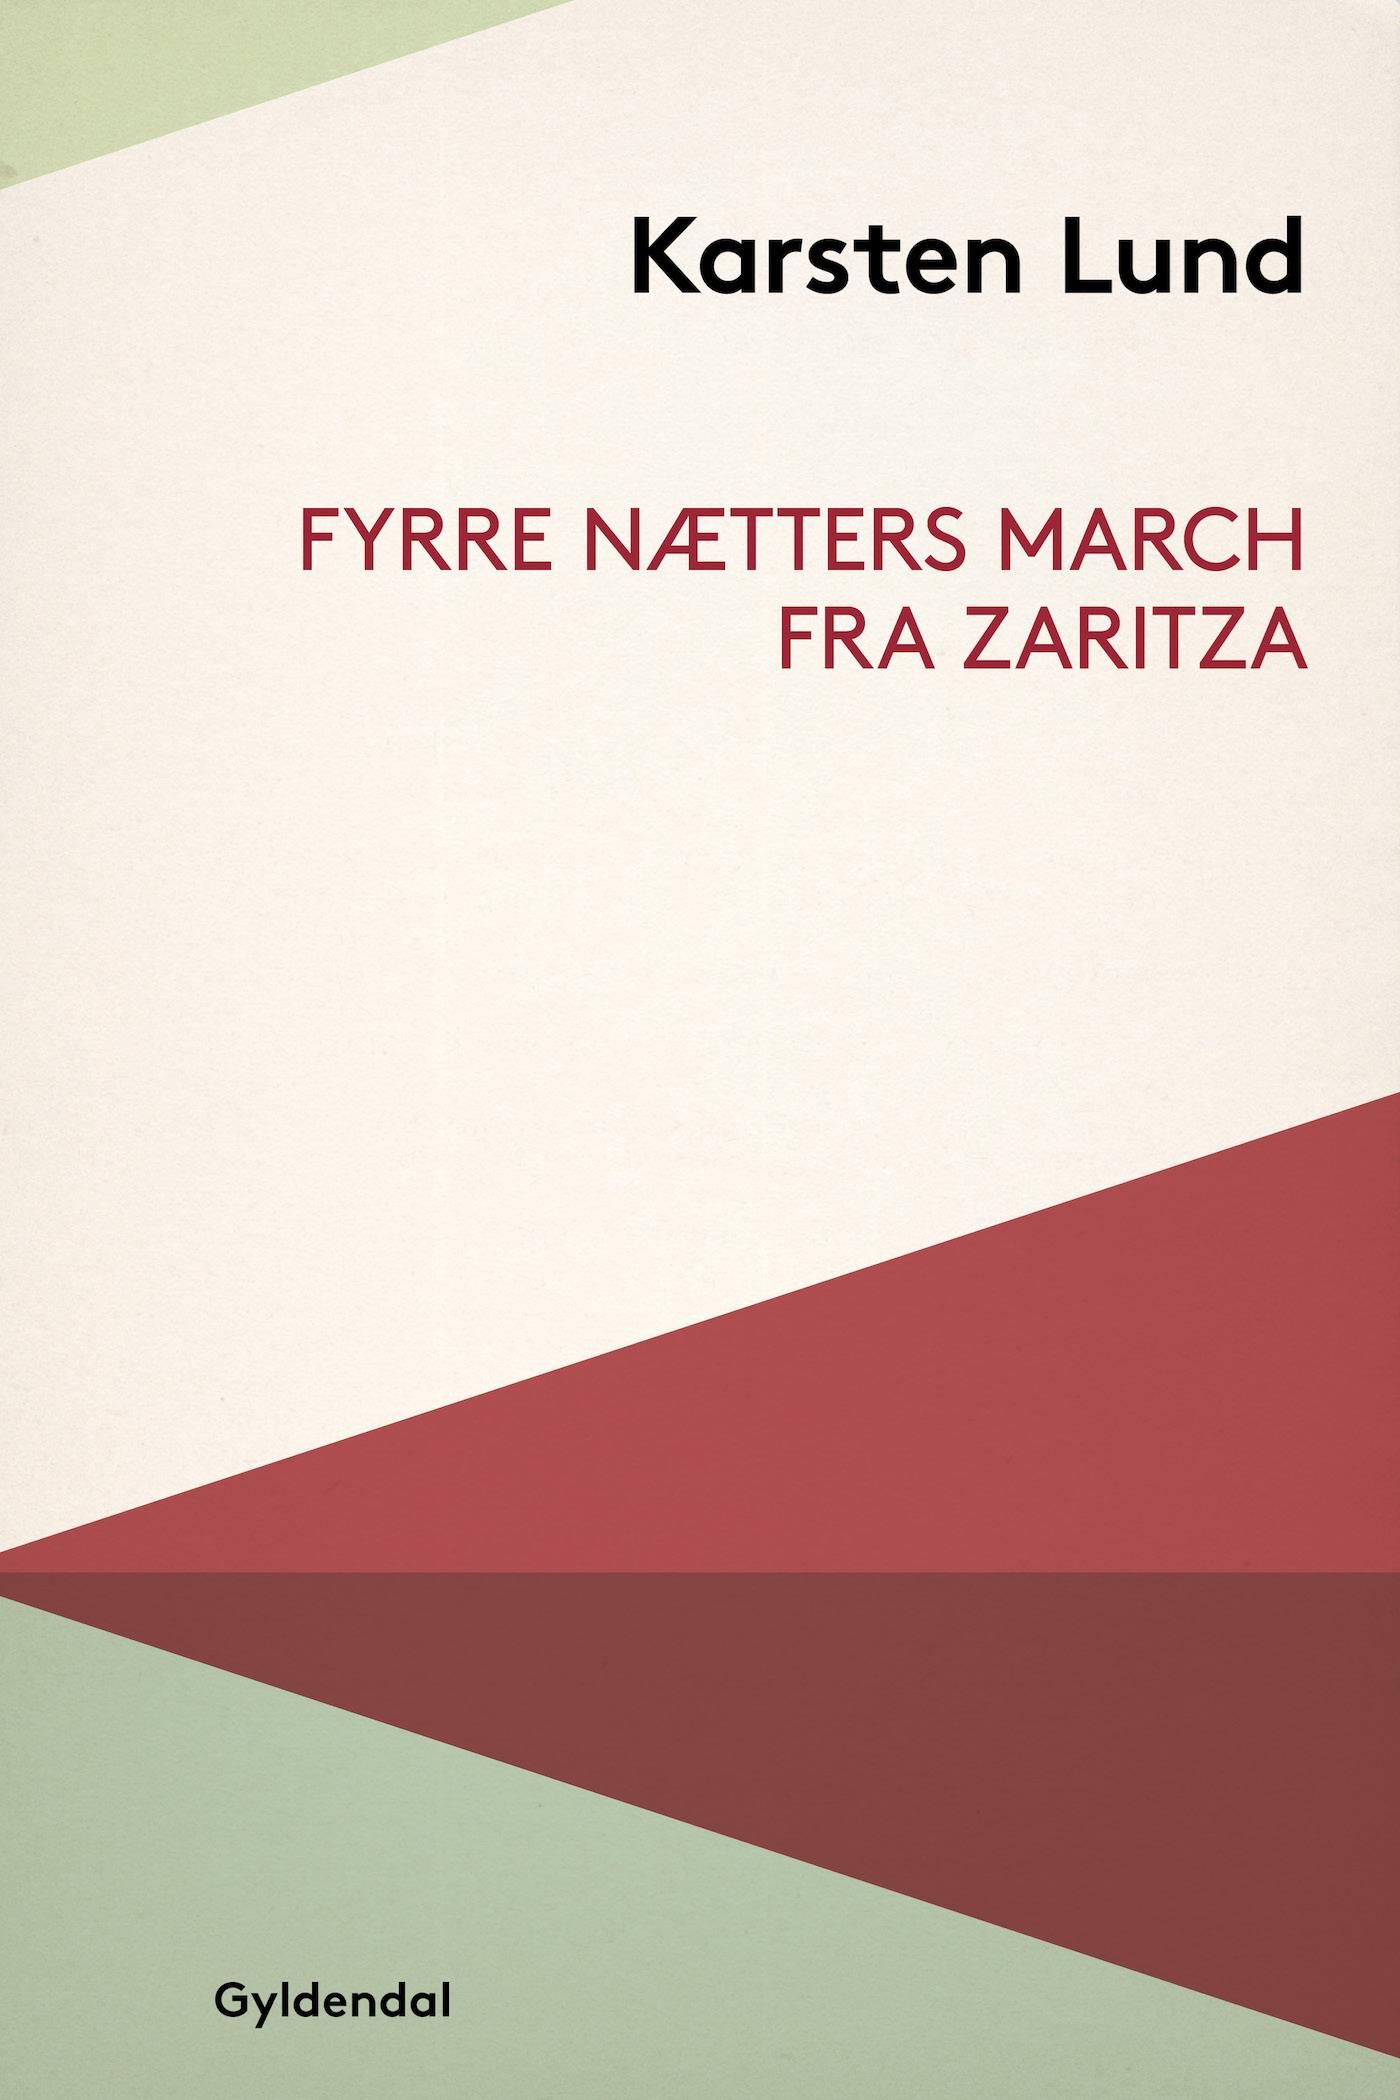 Fyrre nætters march fra Zaritza, eBook by Karsten Lund